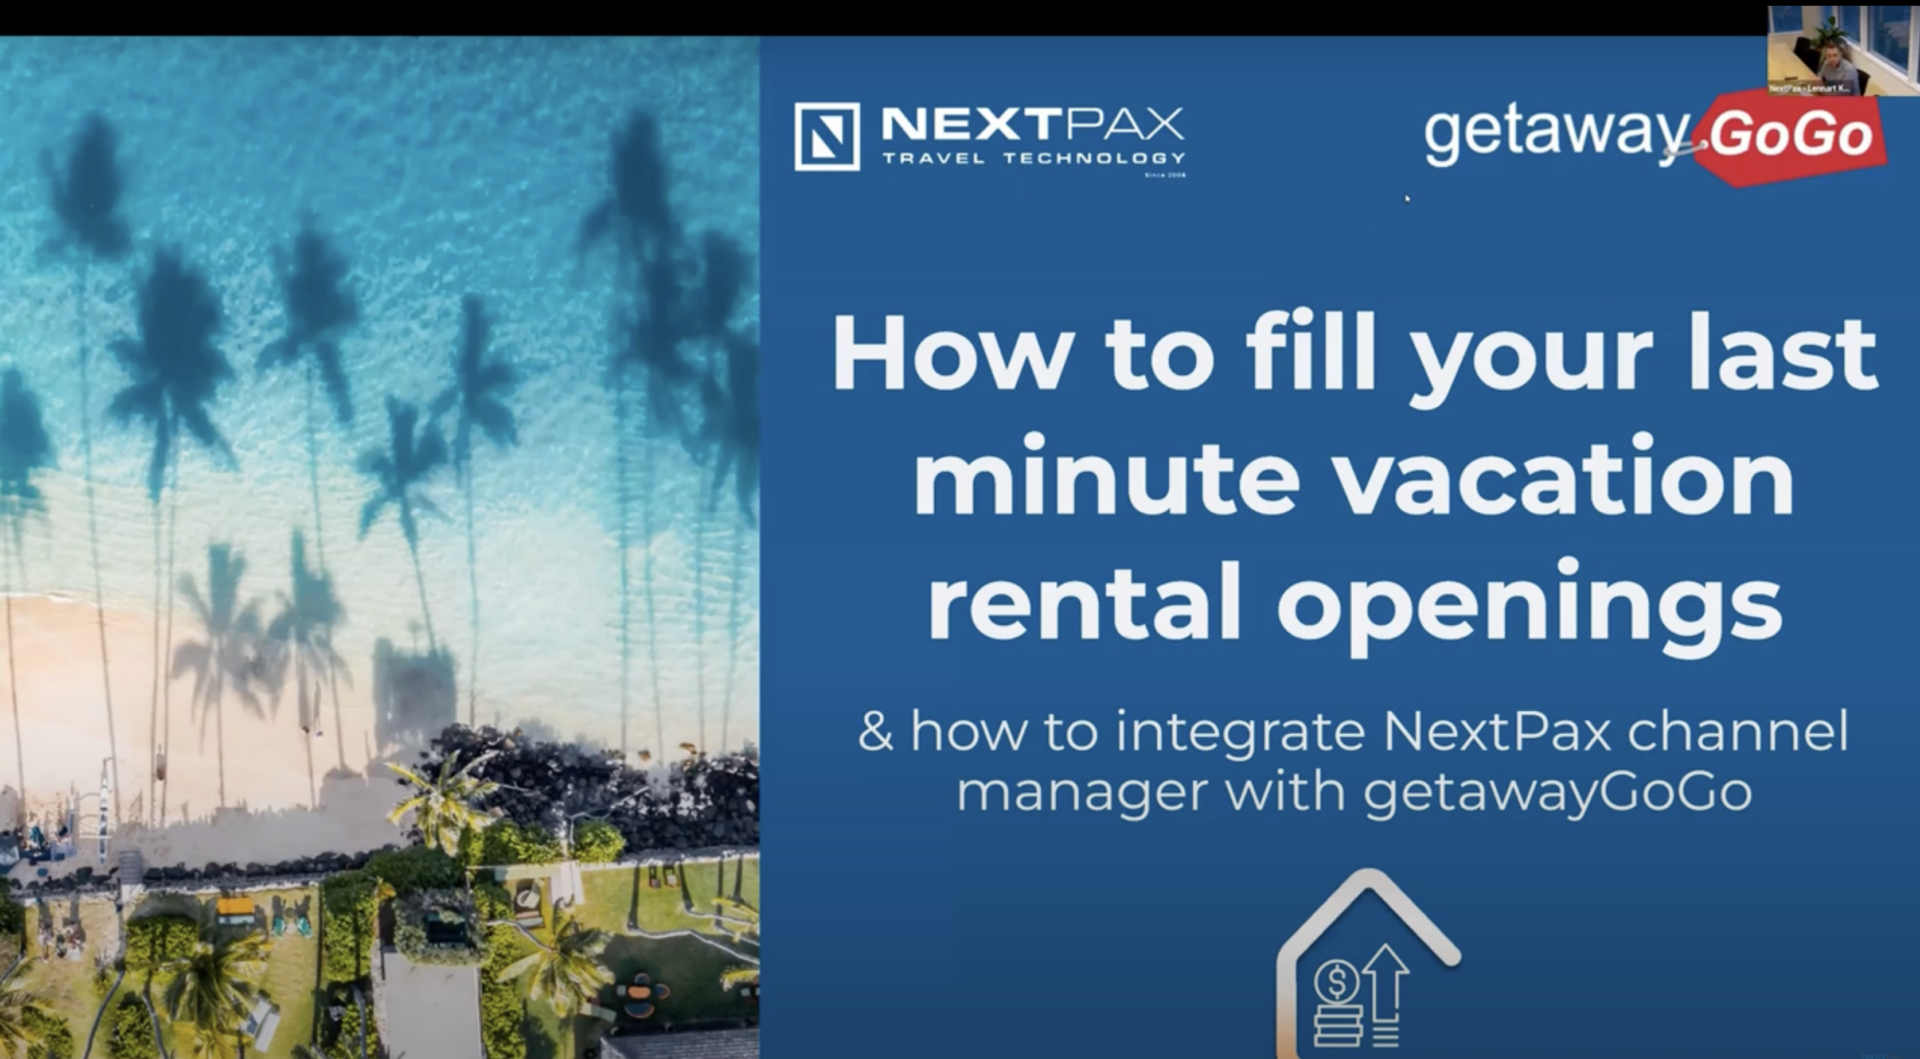 Webinar: How to fill last minute vacation rental openings?